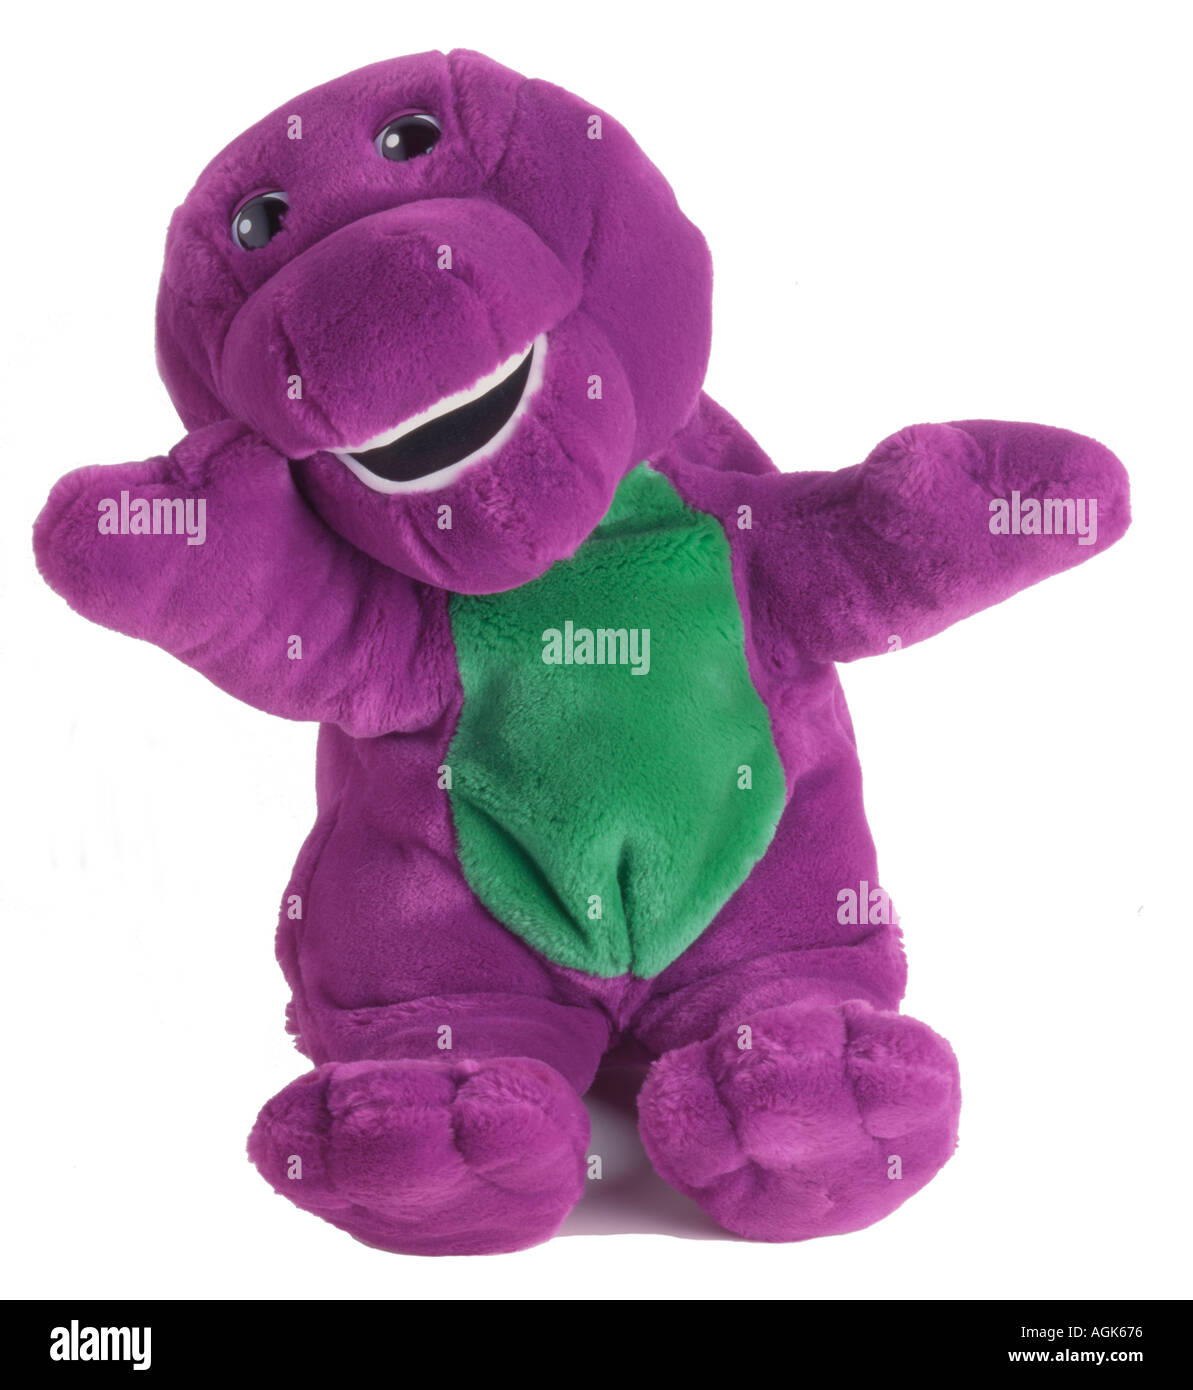 Barney The Purple Dinosaur In 2020 Barney The Dinosaurs Barney Images